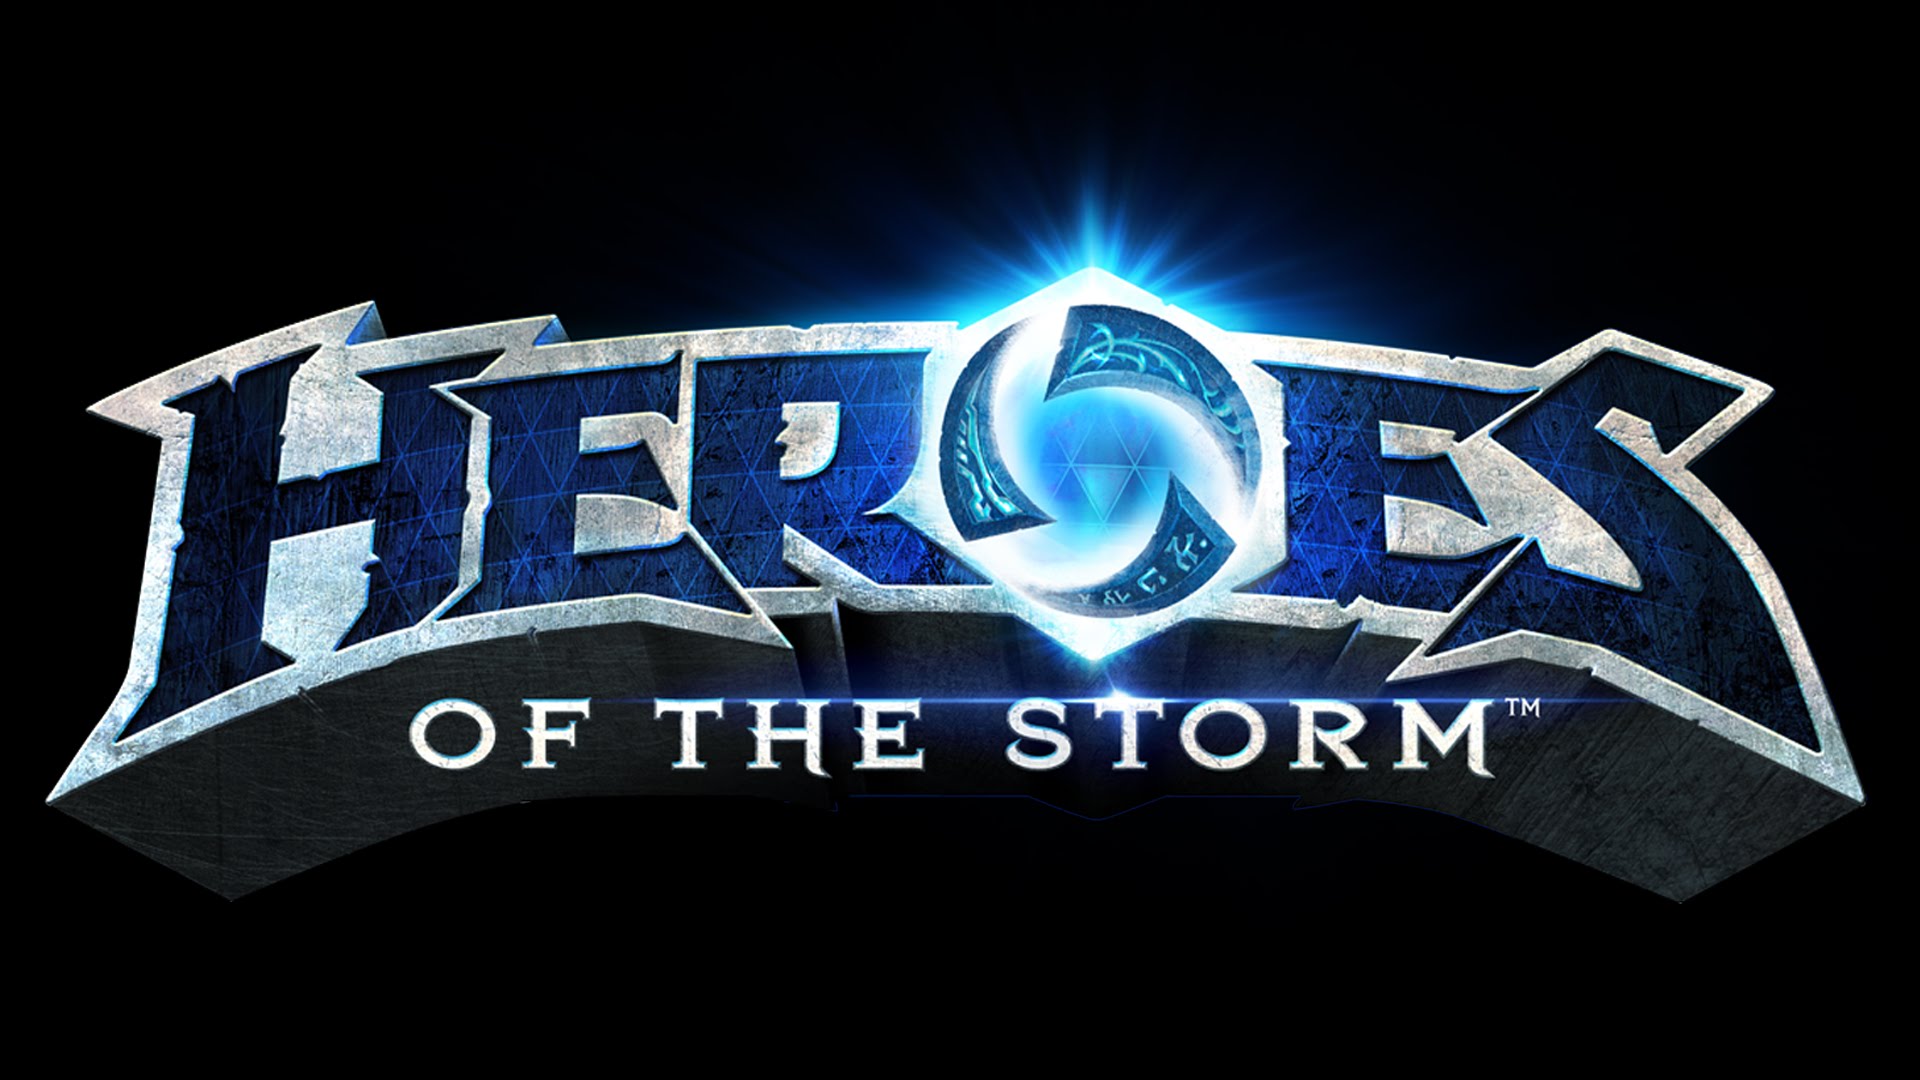 Heroes Of The Storm HD wallpapers, Desktop wallpaper - most viewed